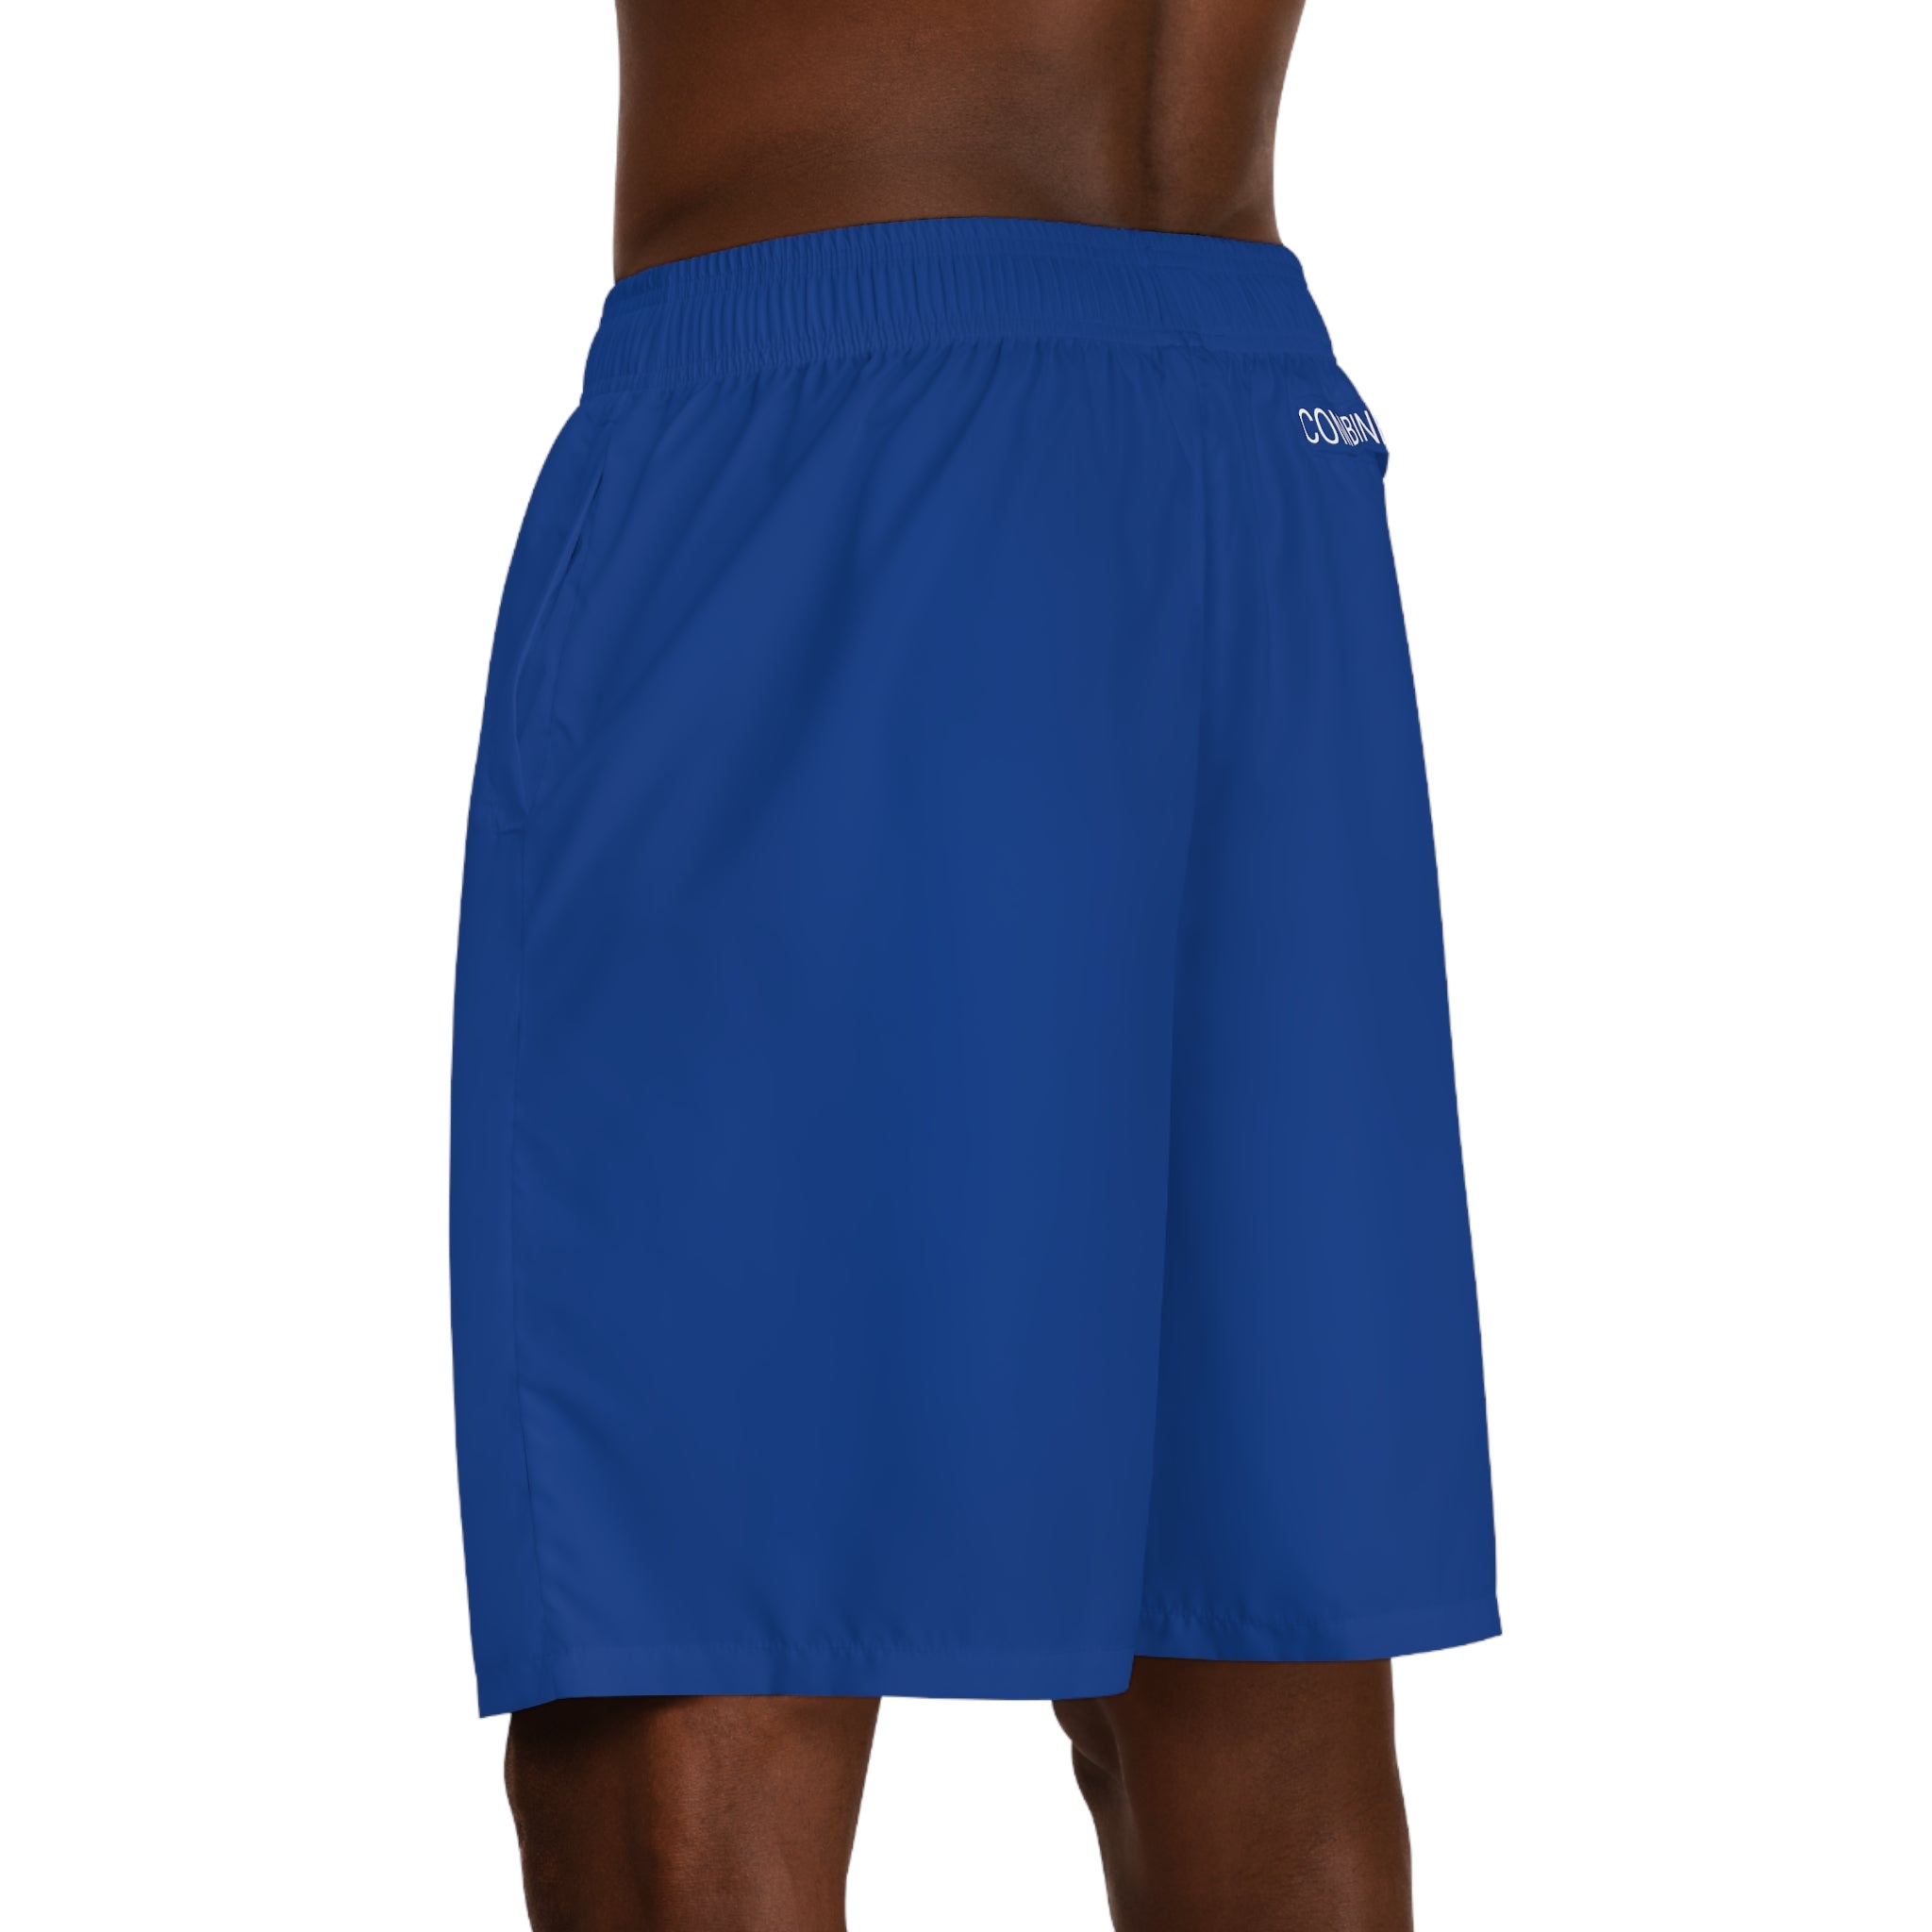 CombinedMinds Men's Jogger Shorts RoyalBlue/White Logo